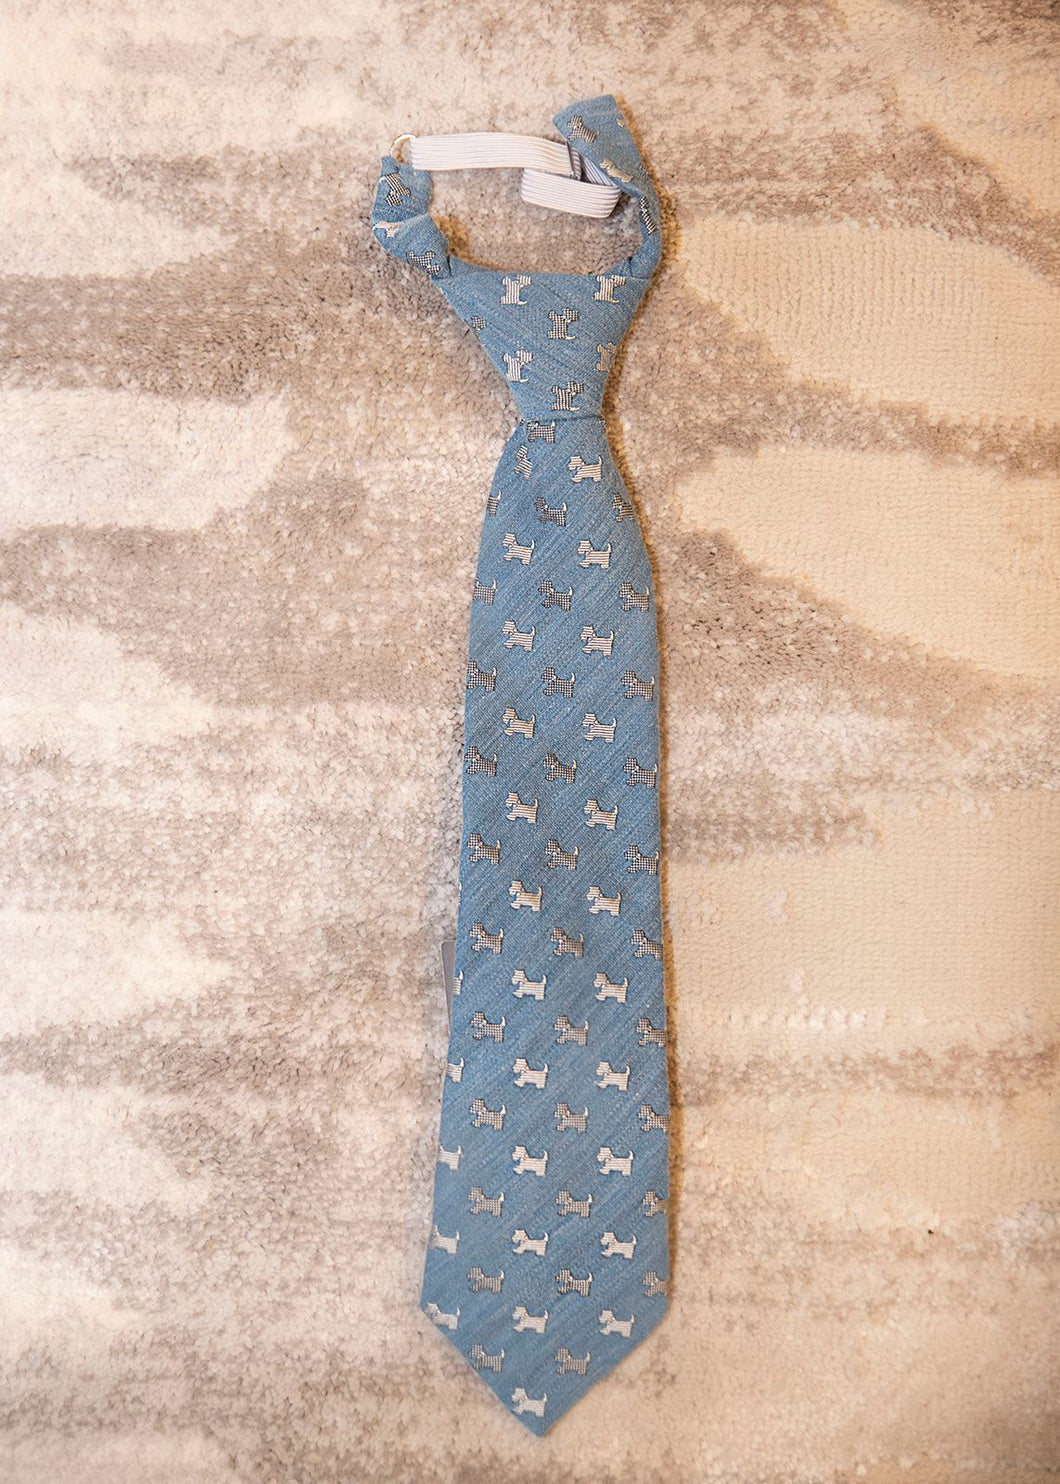 Corbata azul estampado perritos